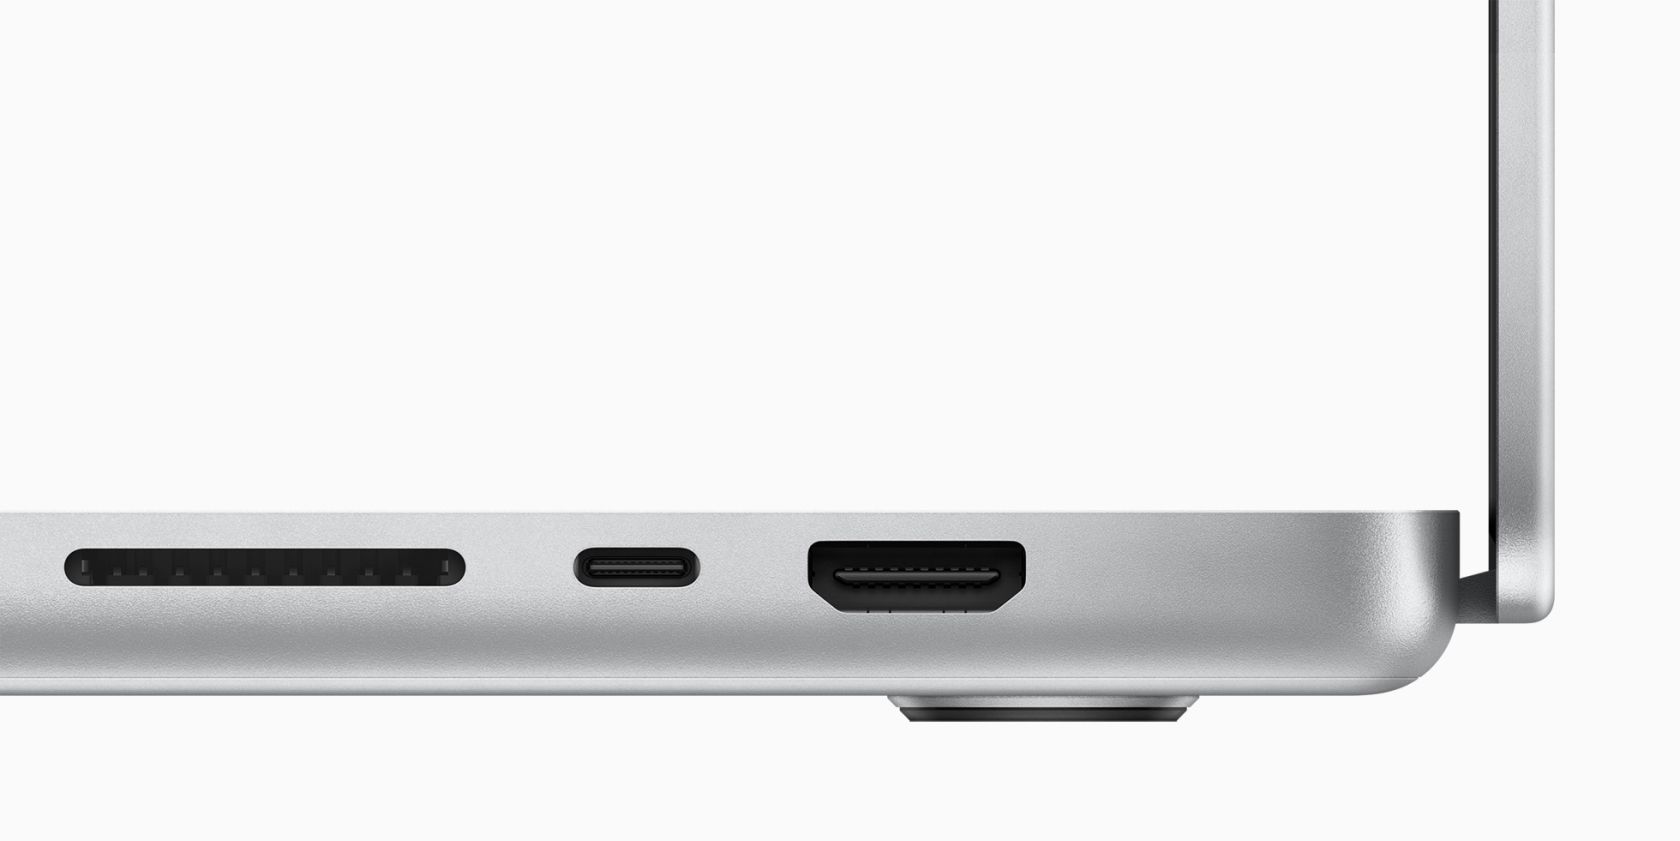 Apple 14-inch MacBook Pro ports